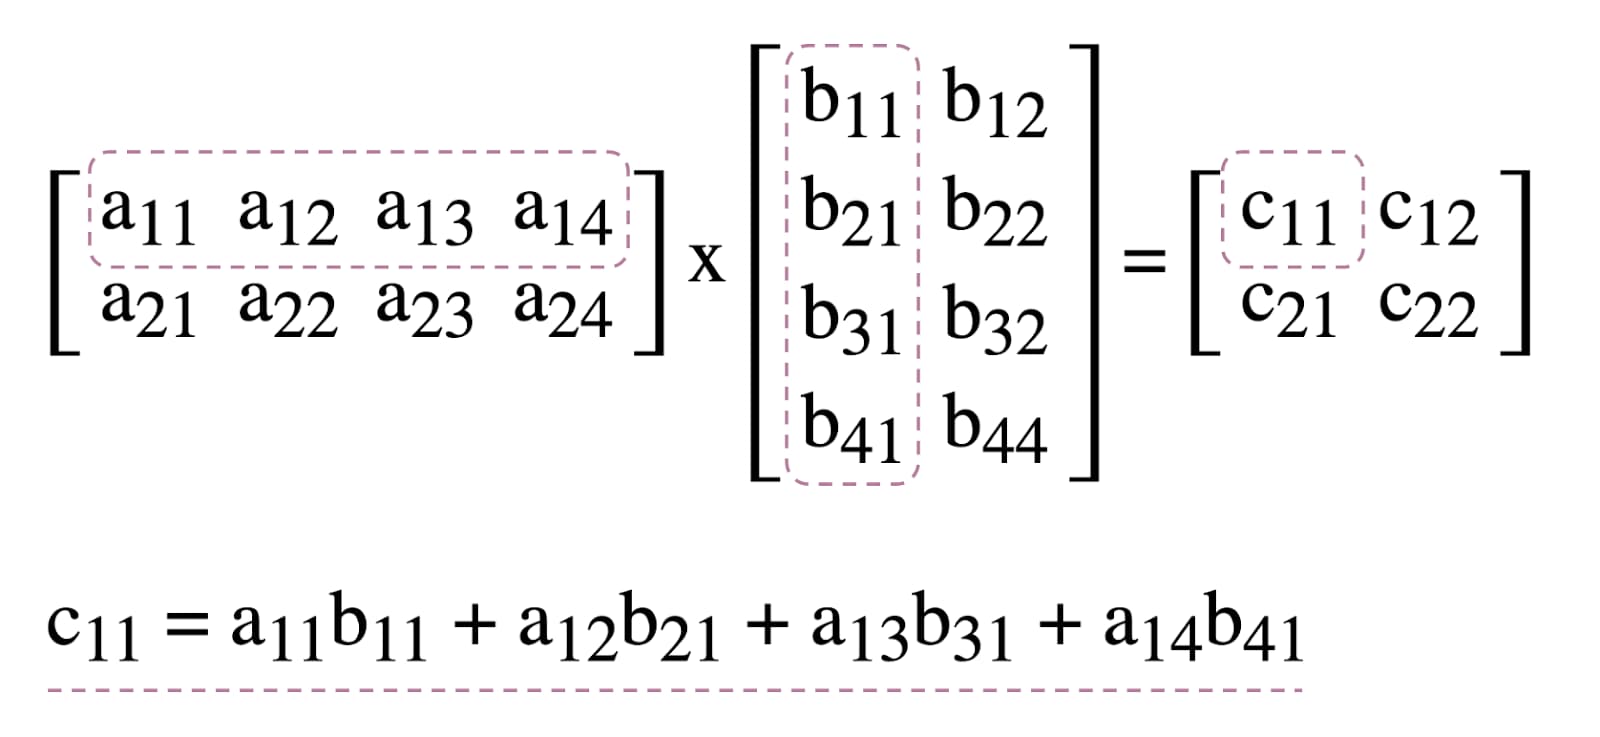 Diagrama de multiplicación de matrices